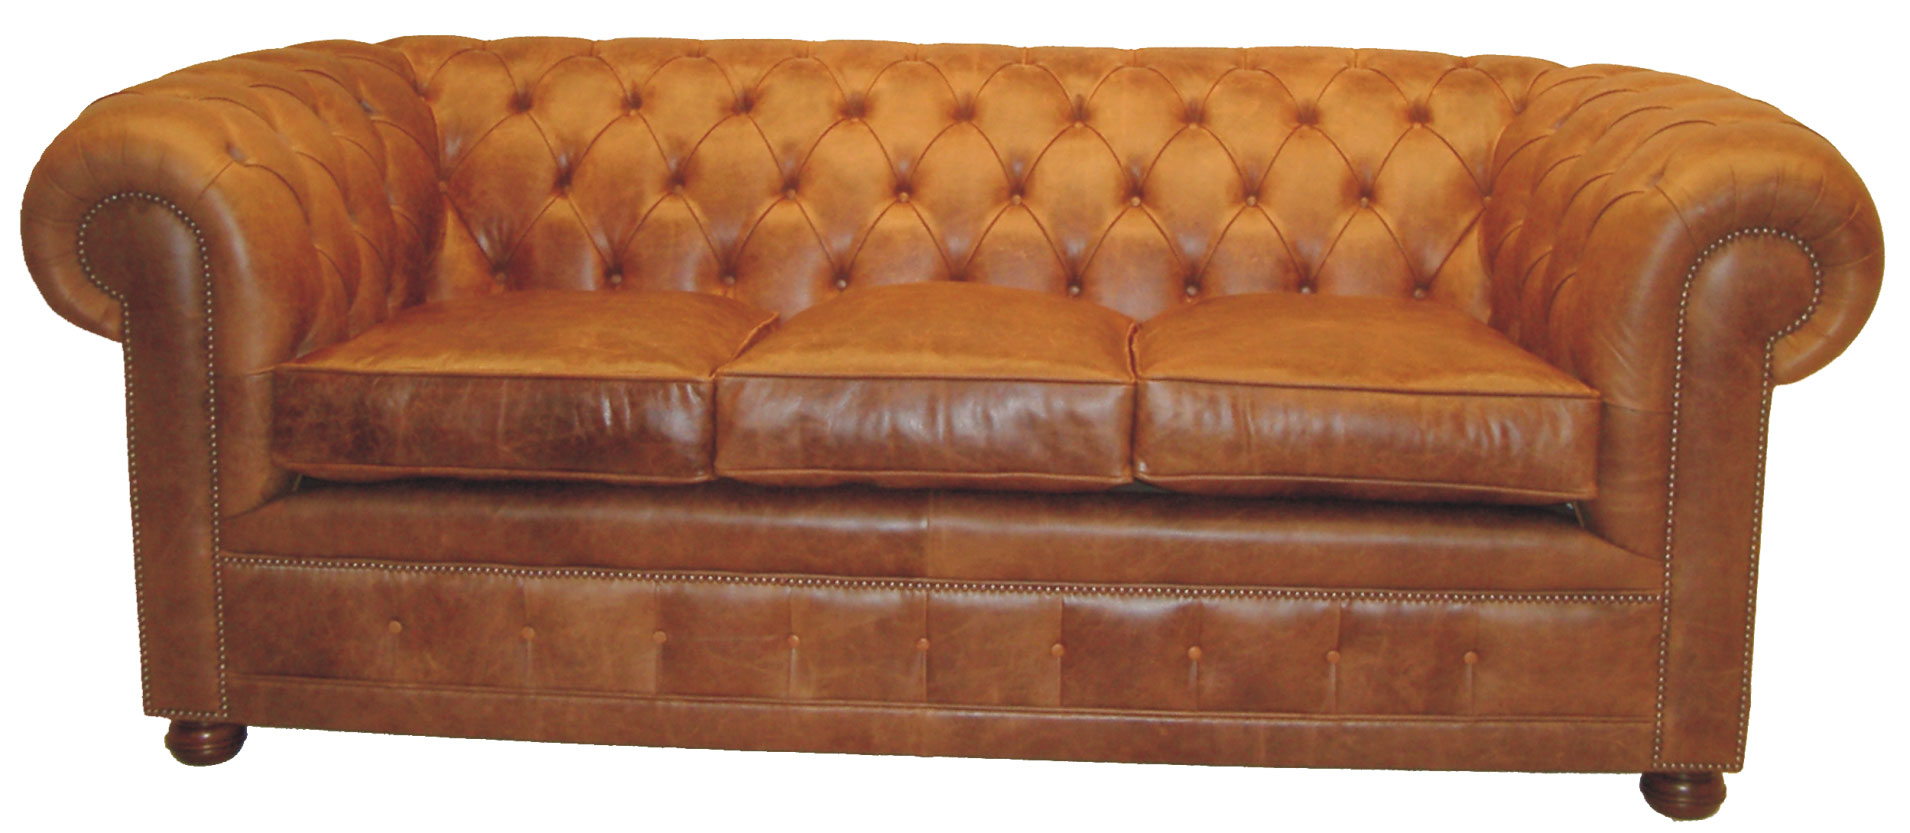 "Marquess" 3-Sitzer Original englisches Chesterfield Sofa